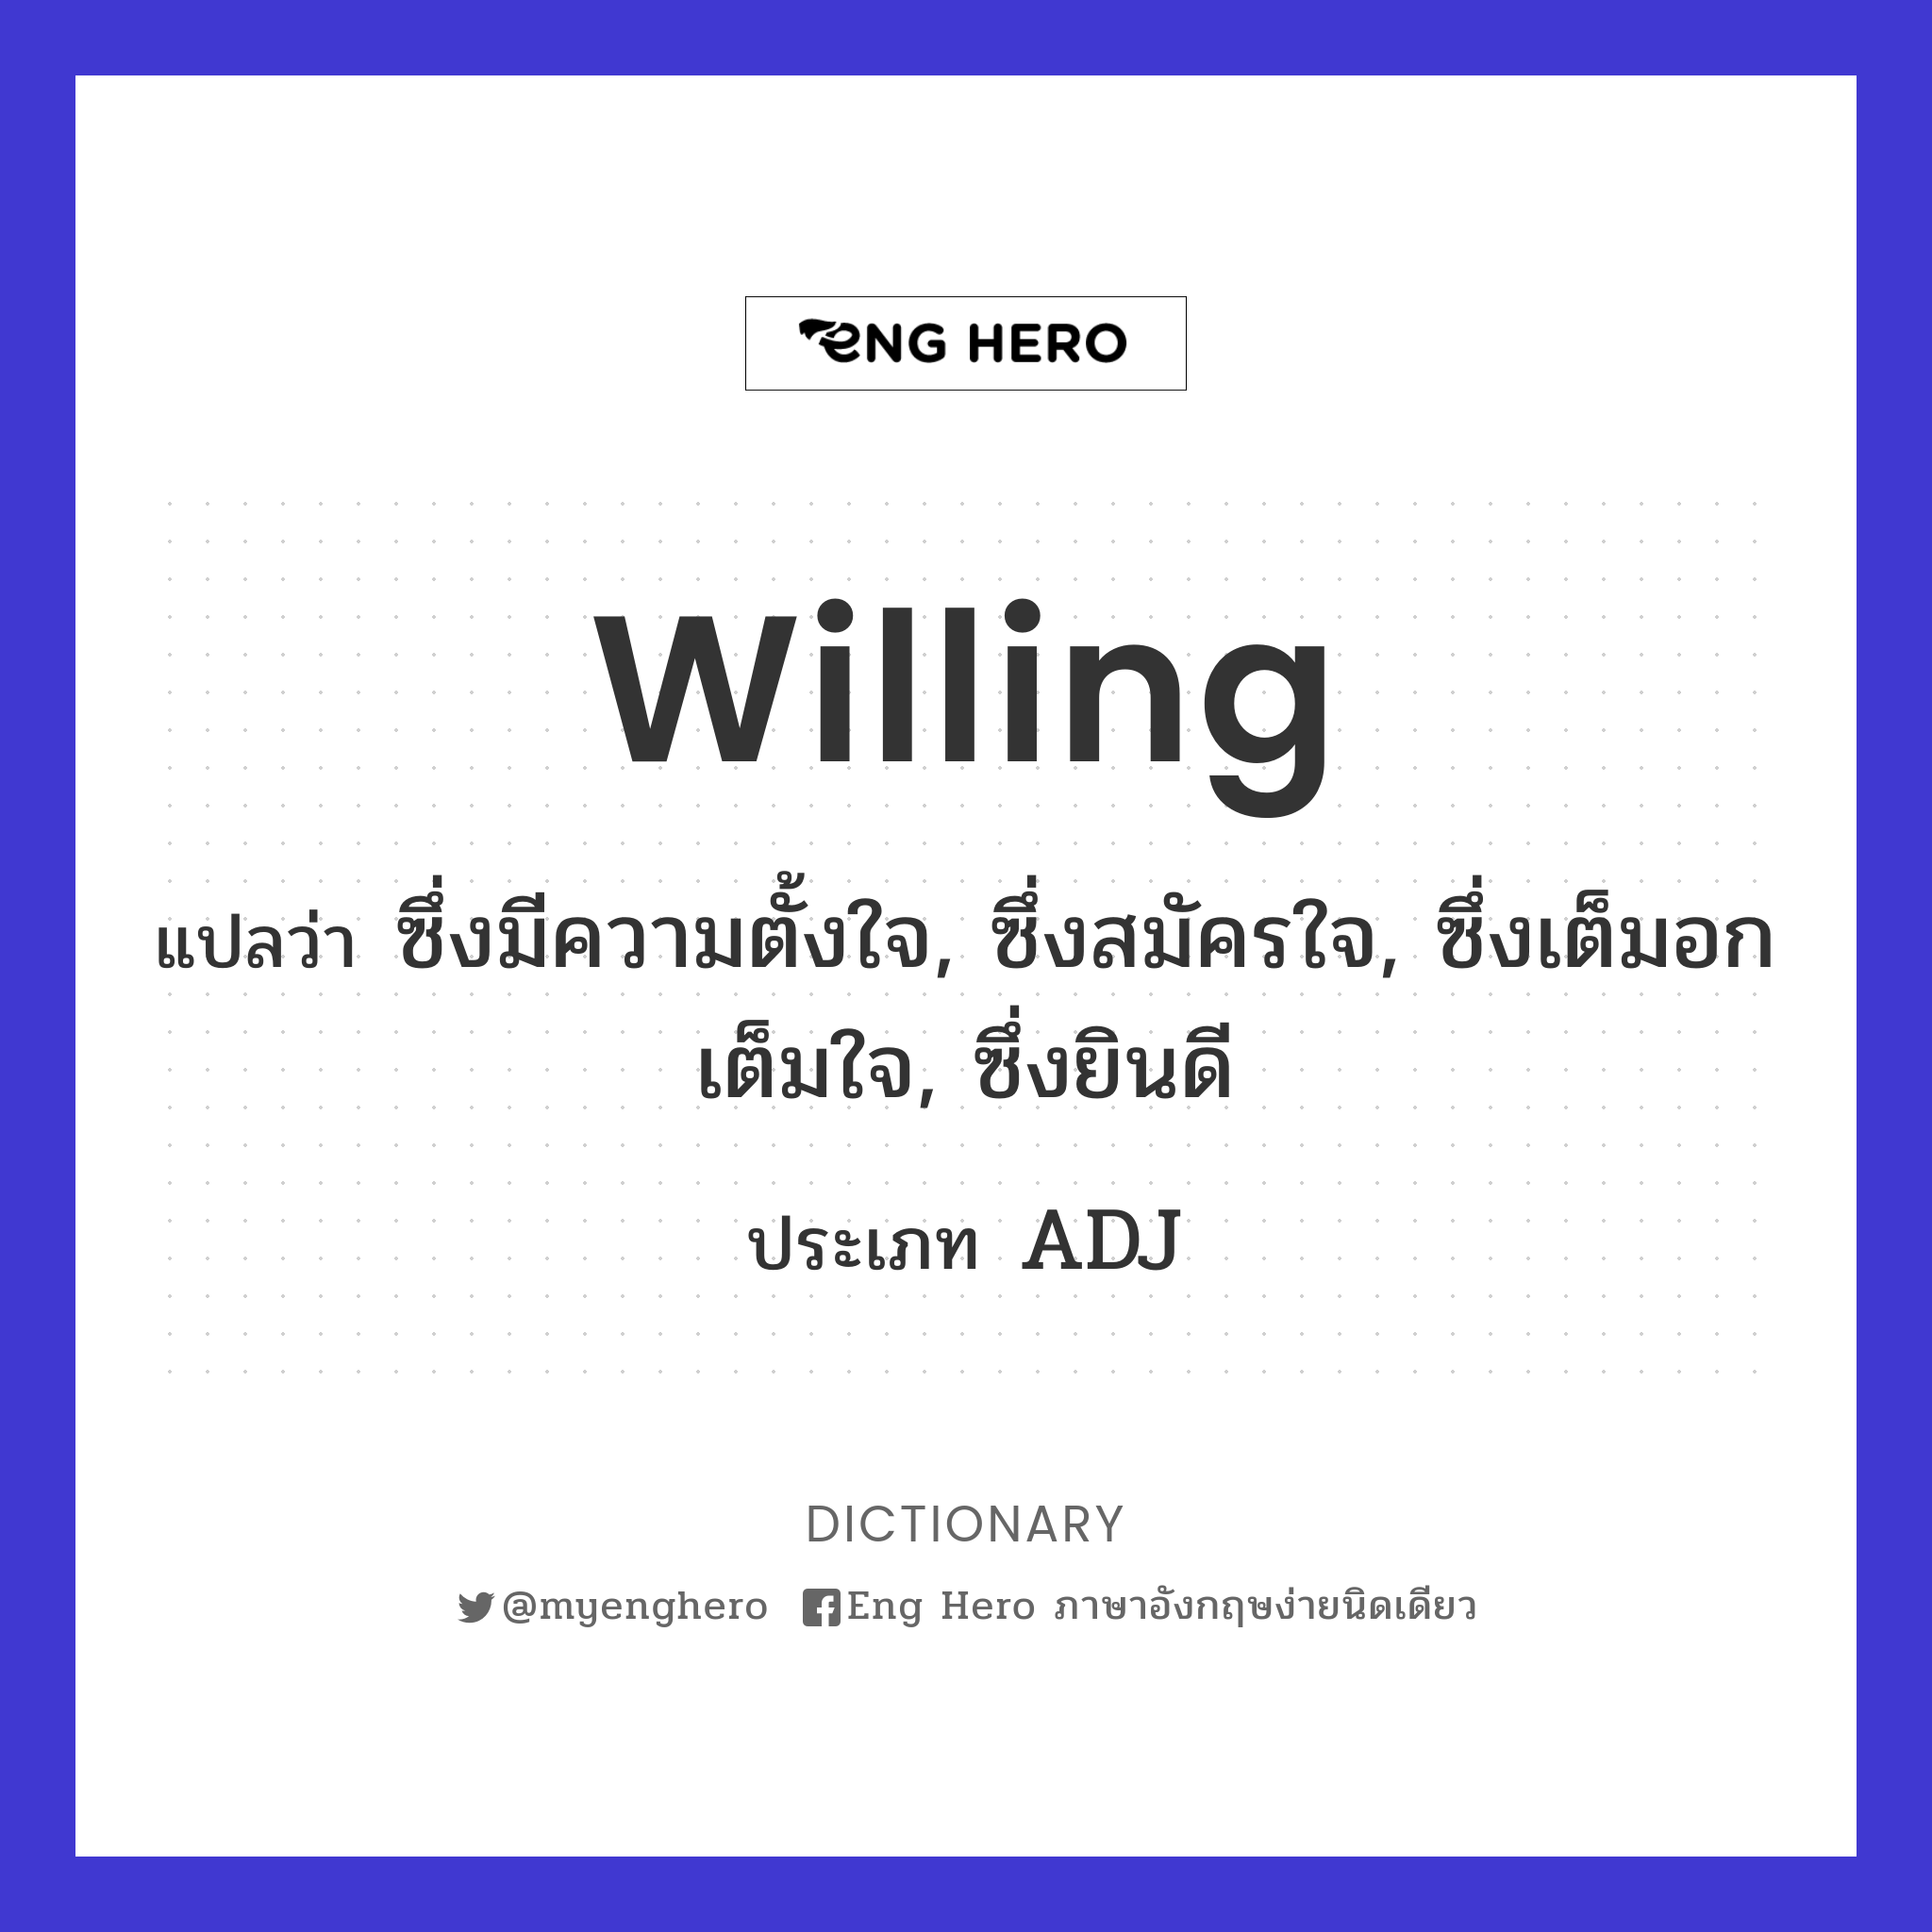 willing